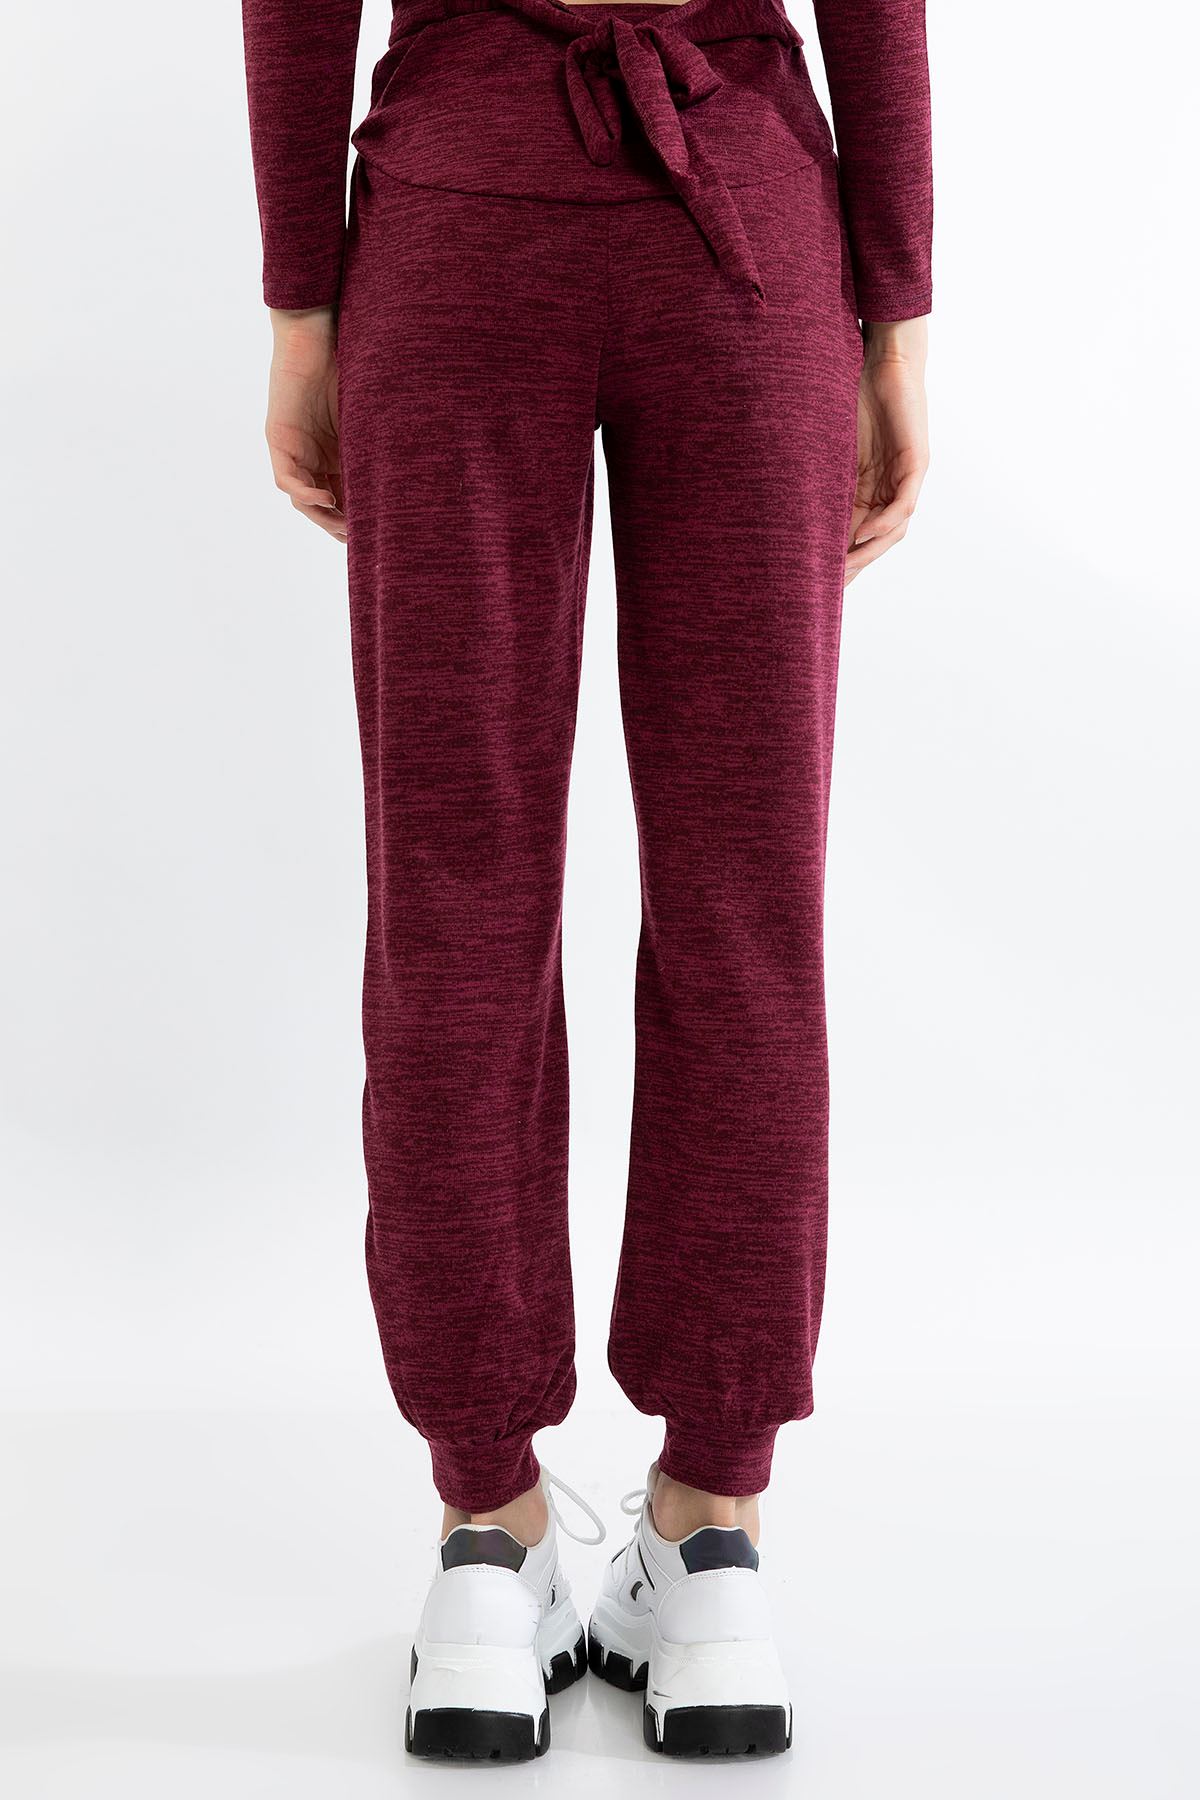 Melange Fabric Long Comfy Fit Gray Women'S Trouser - Burgundy